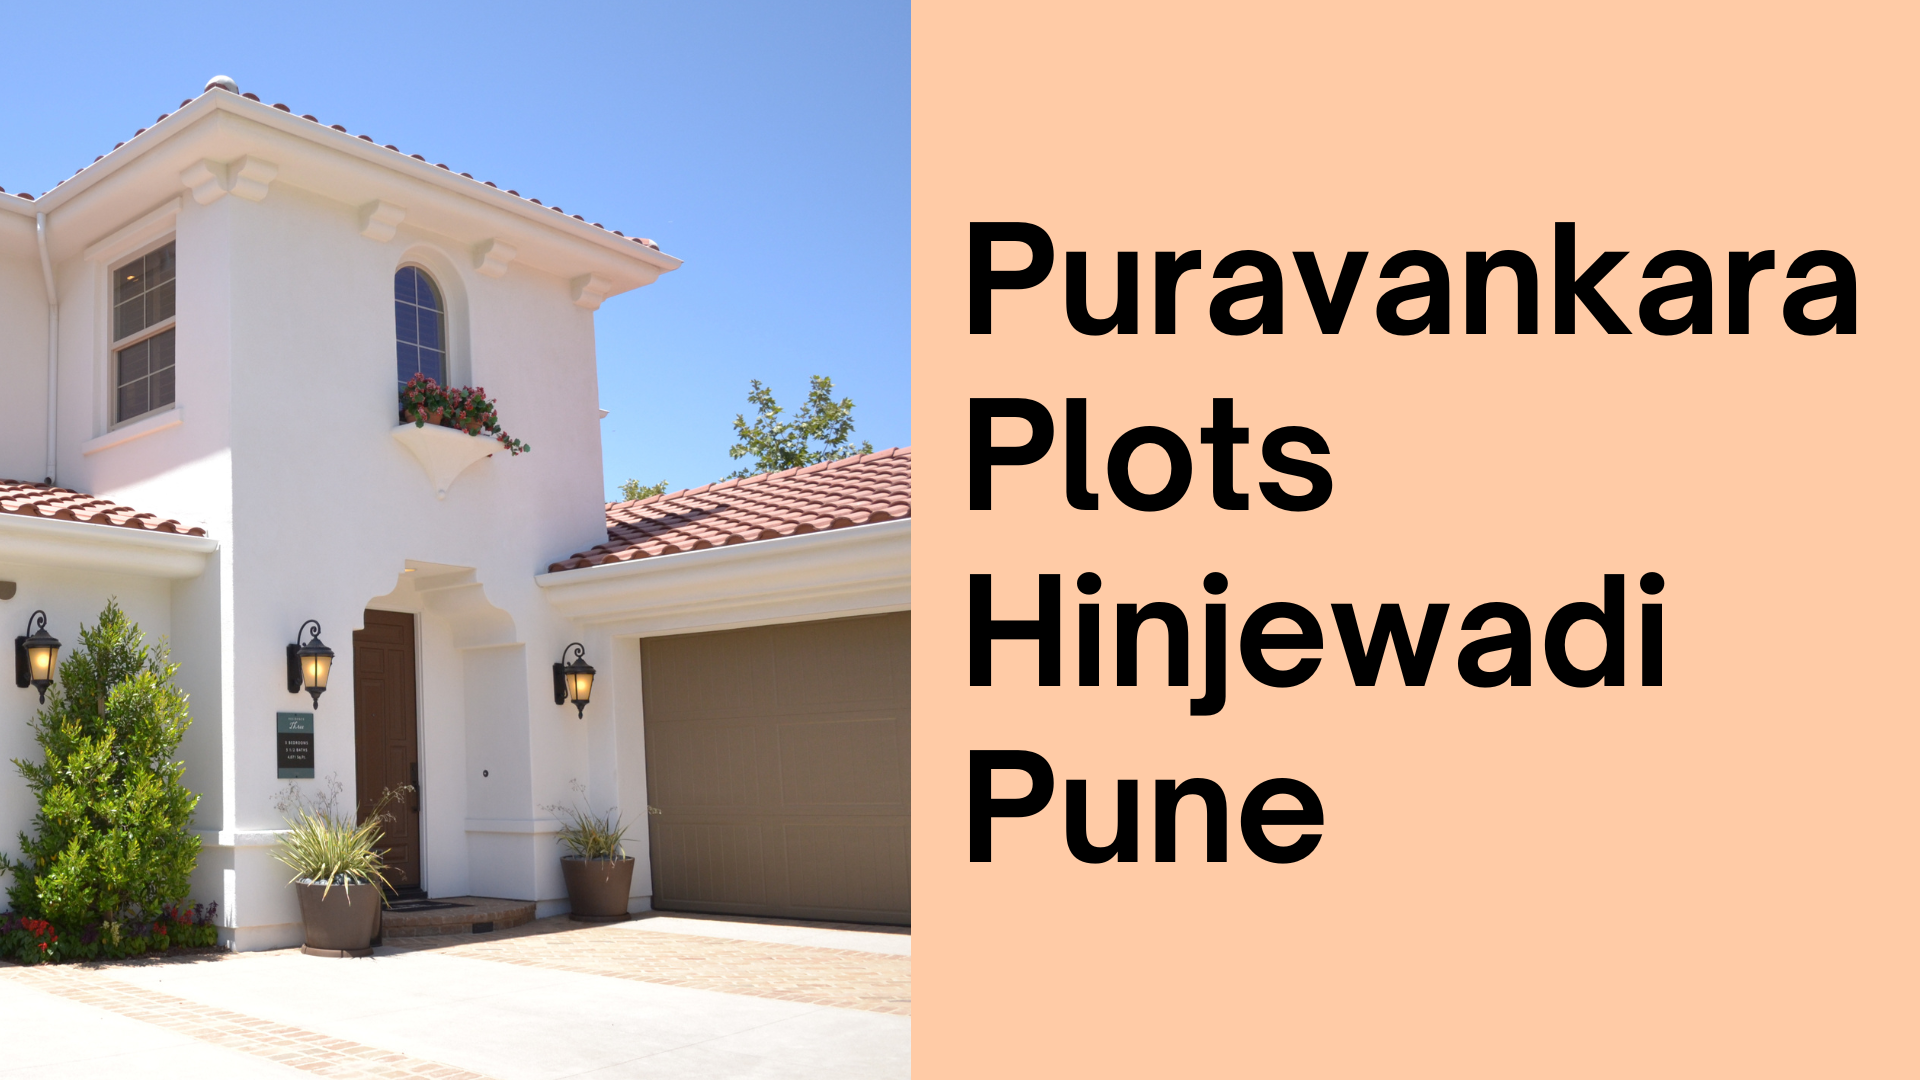 Puravankara Plots Hinjewadi Pune